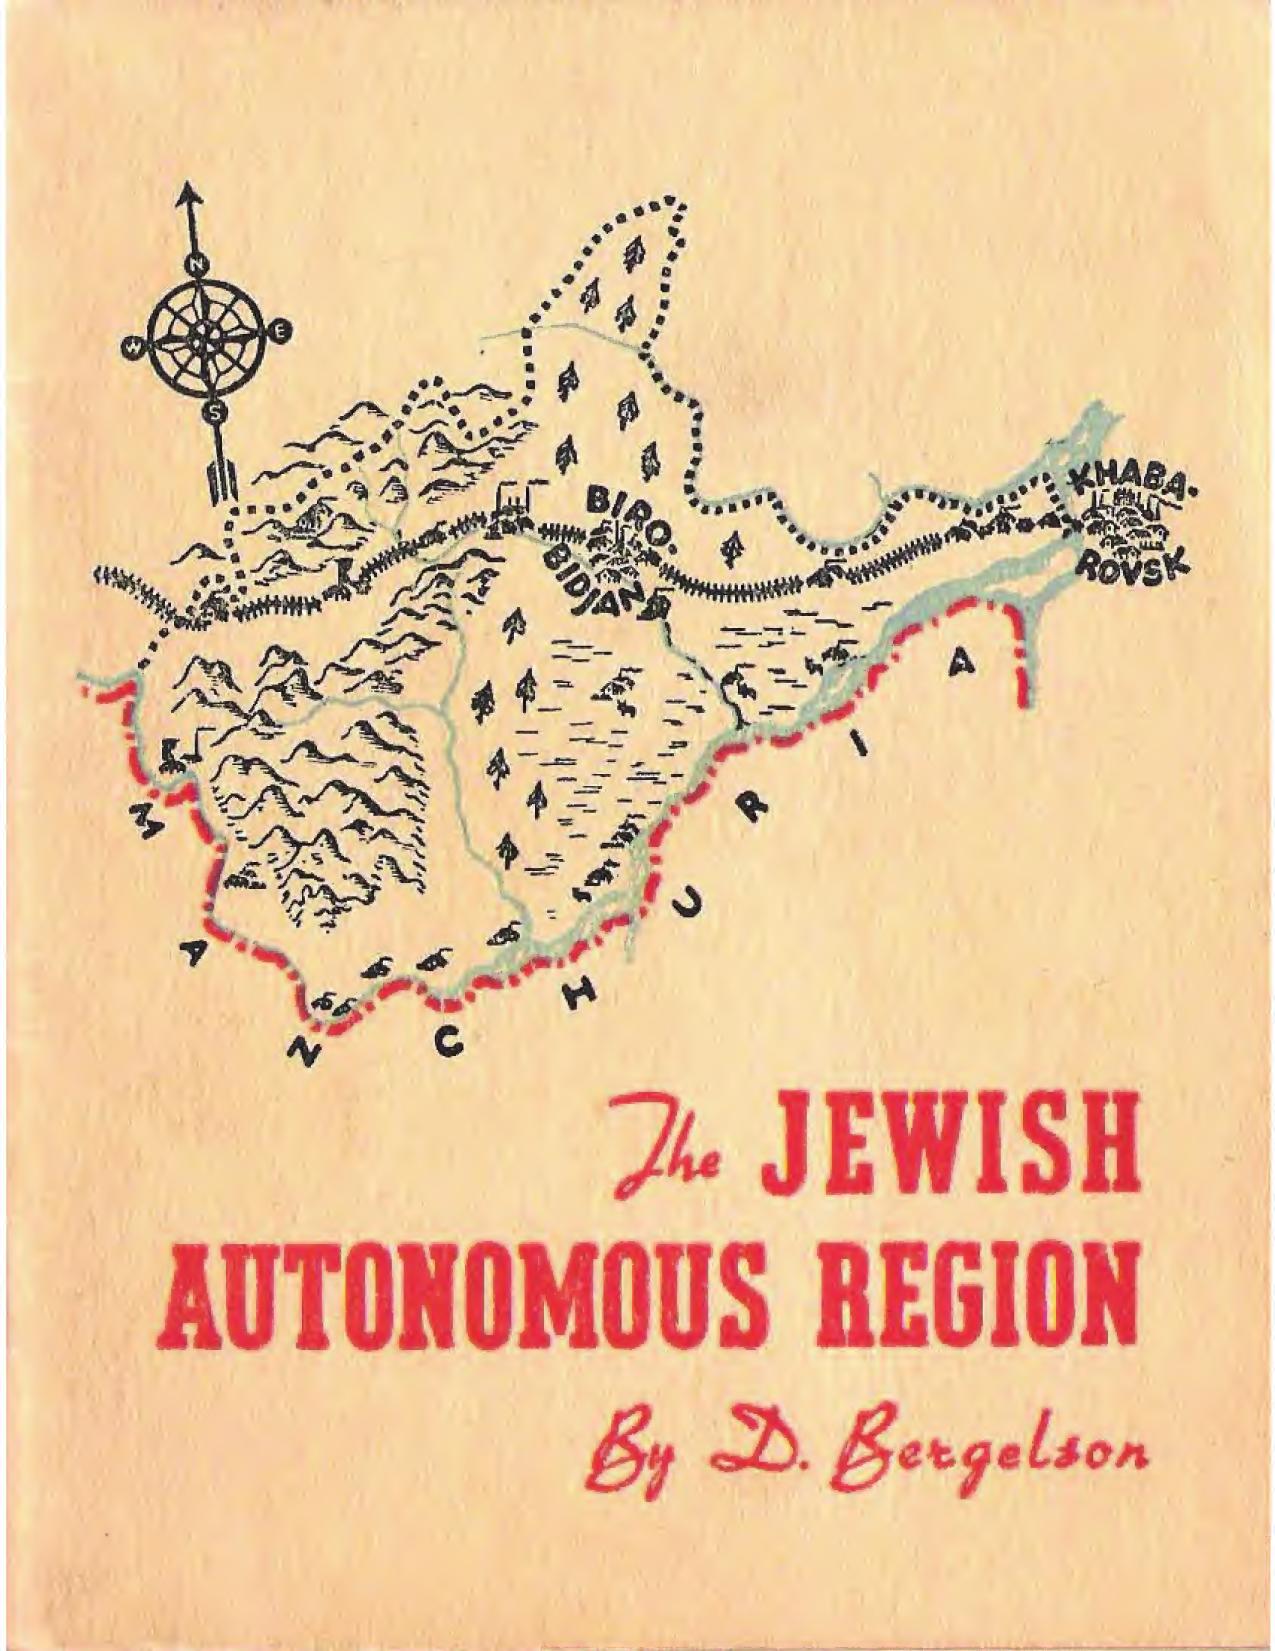 The Jewish Autonomous Region (1939) by David Bergelson